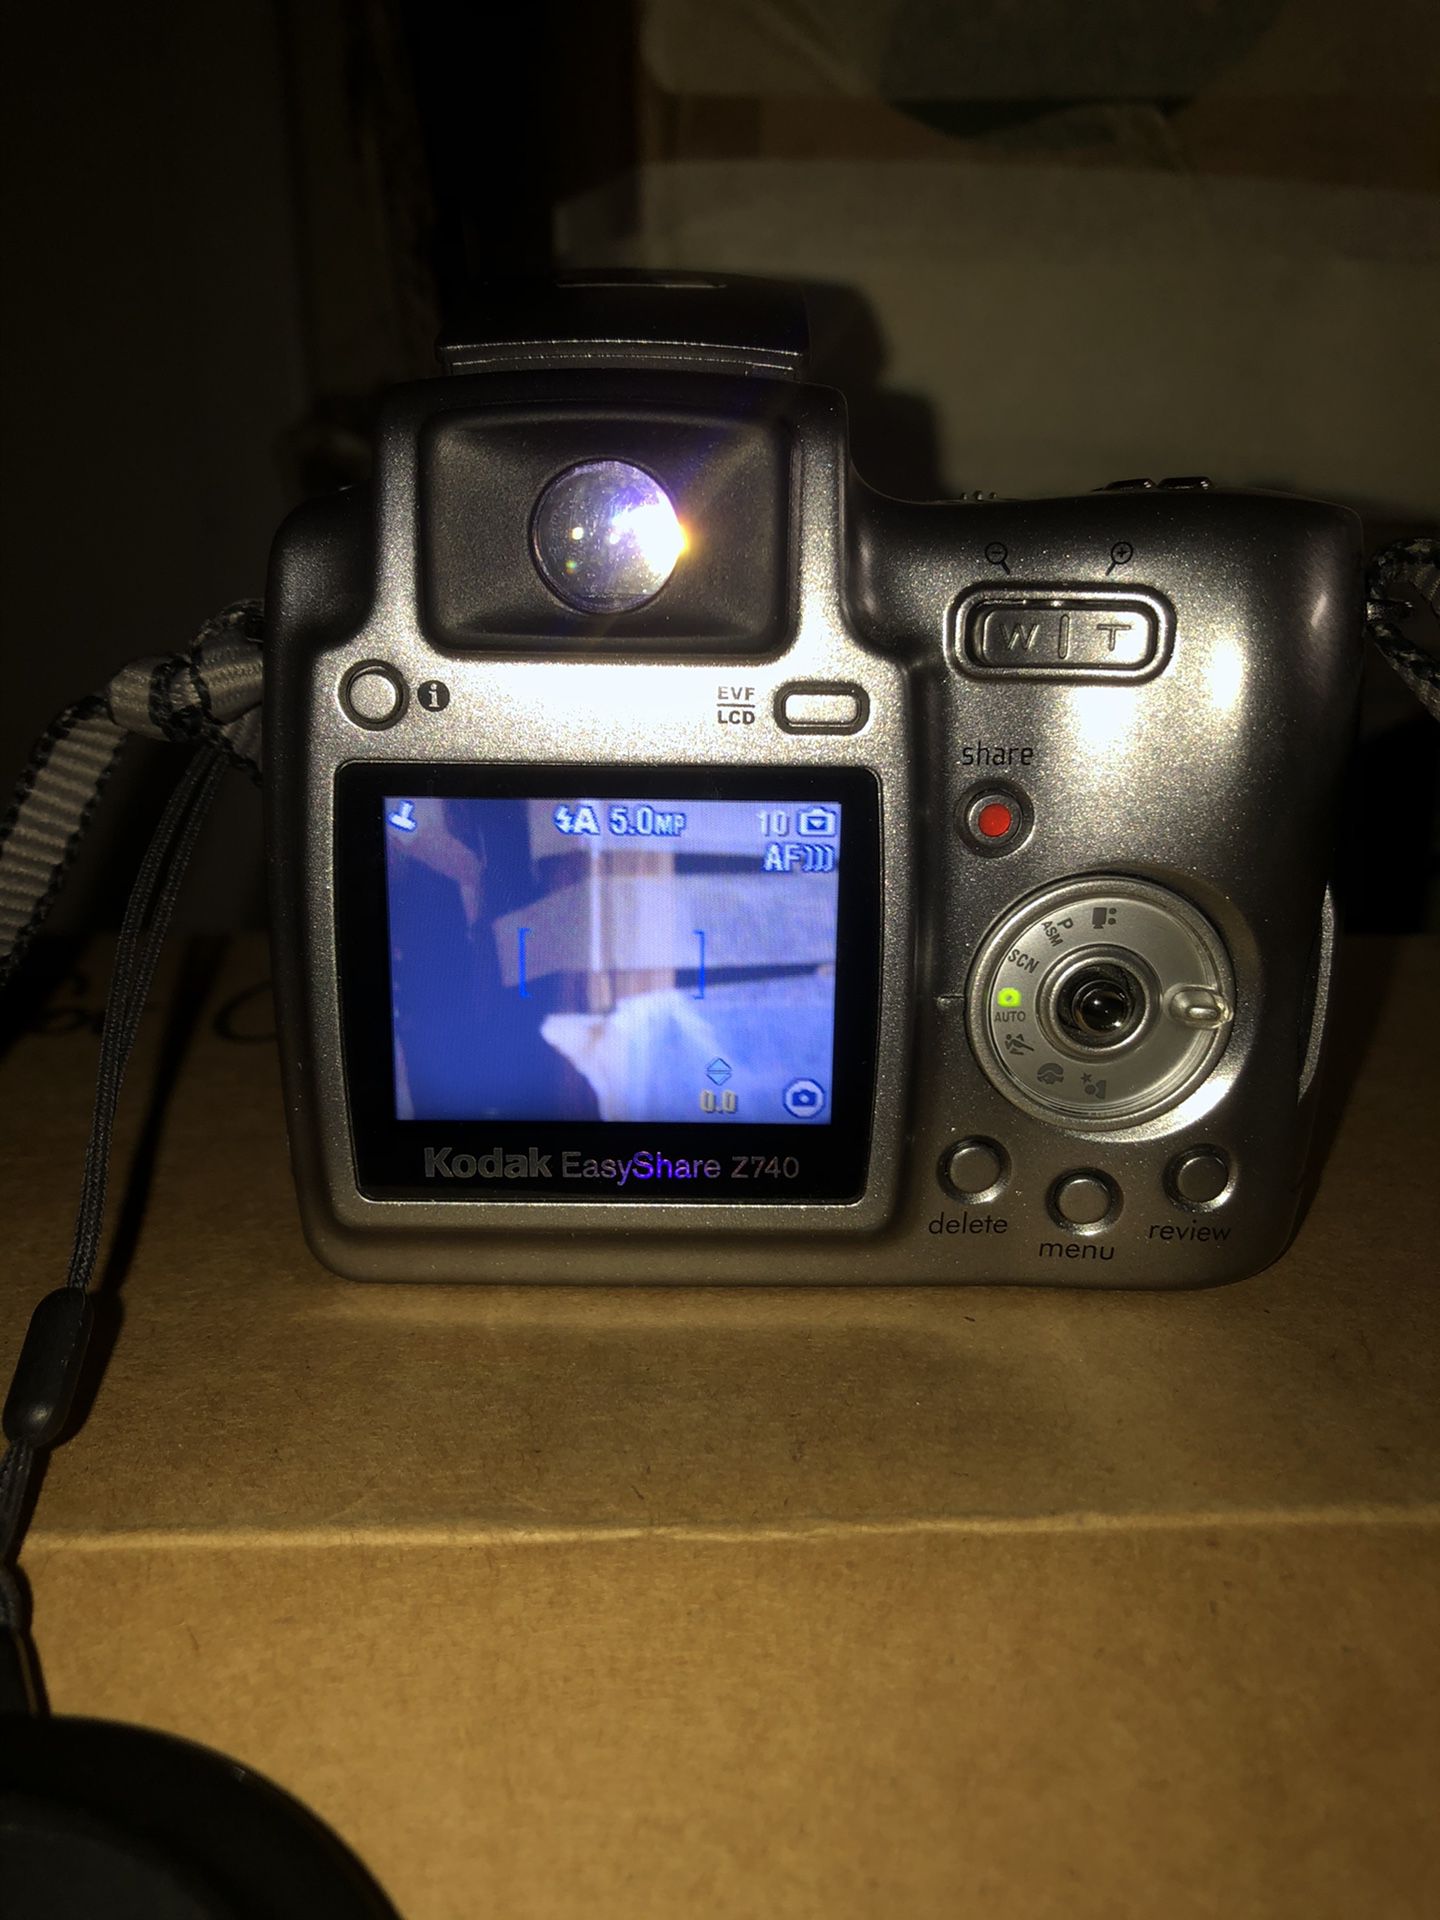 Kodak Camera with printer